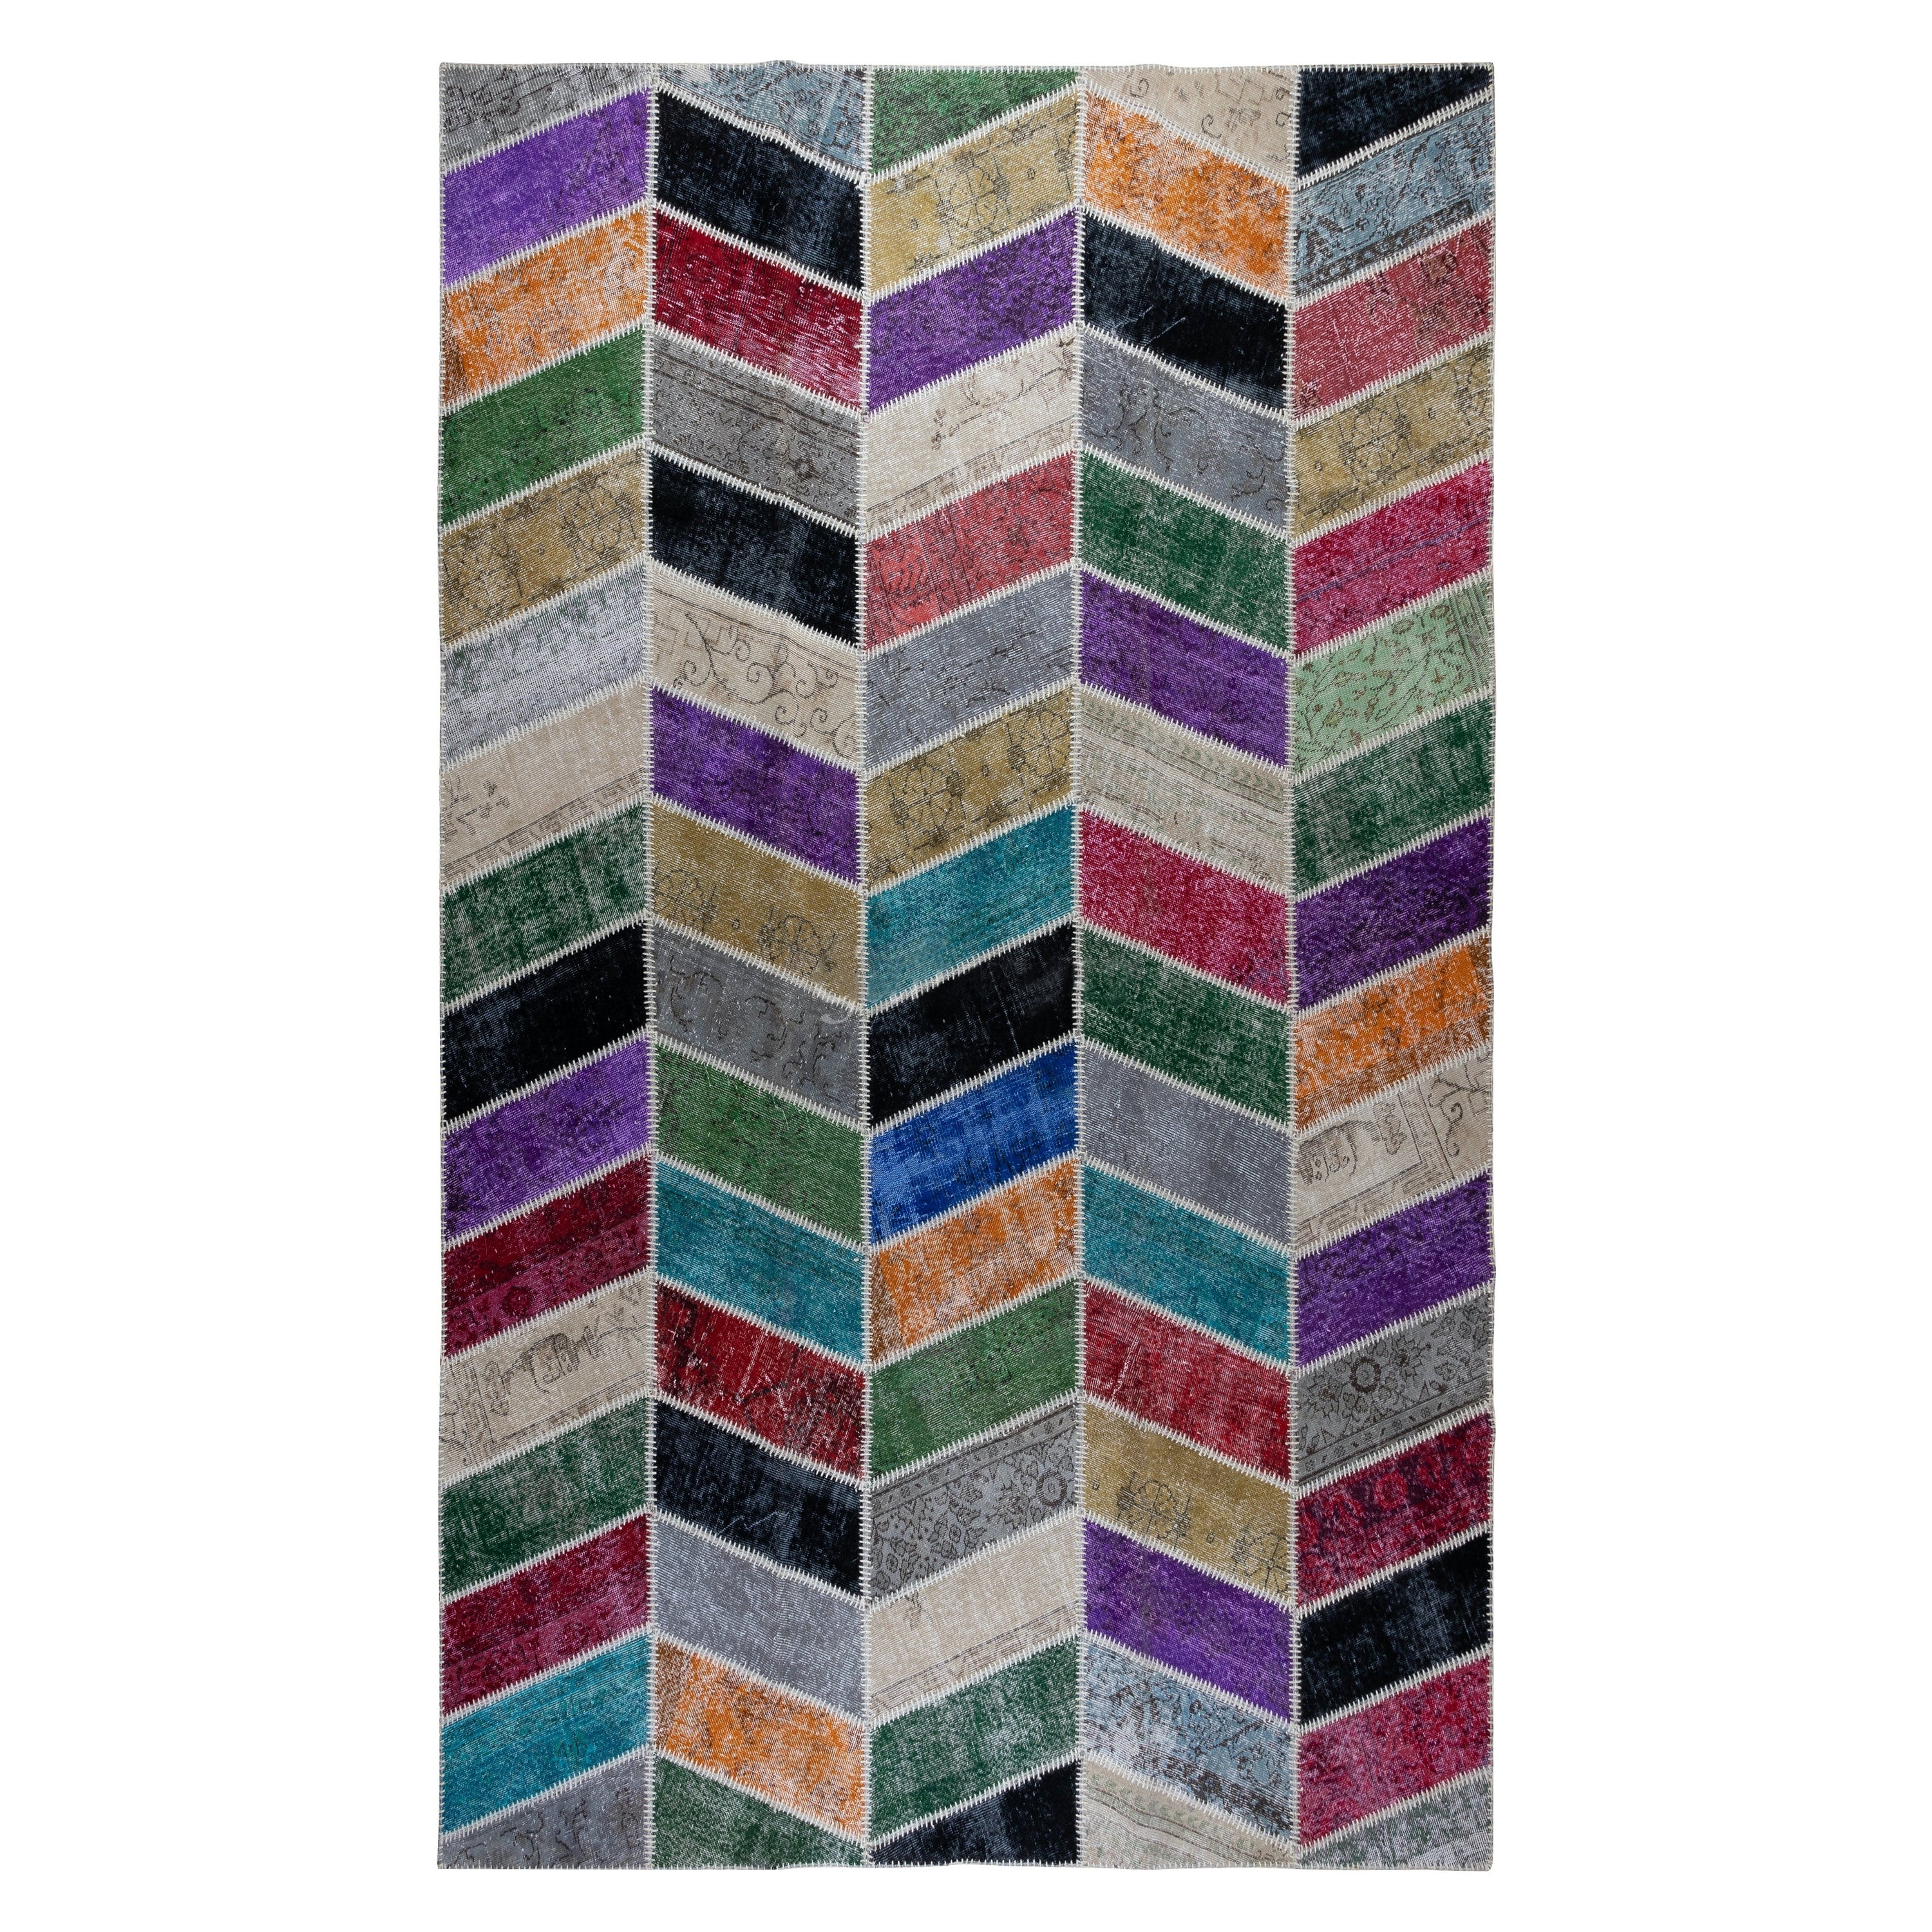 Vibrant Handmade Patchwork Rug. Modern Look Colorful Carpet. Custom Options Ava. For Sale